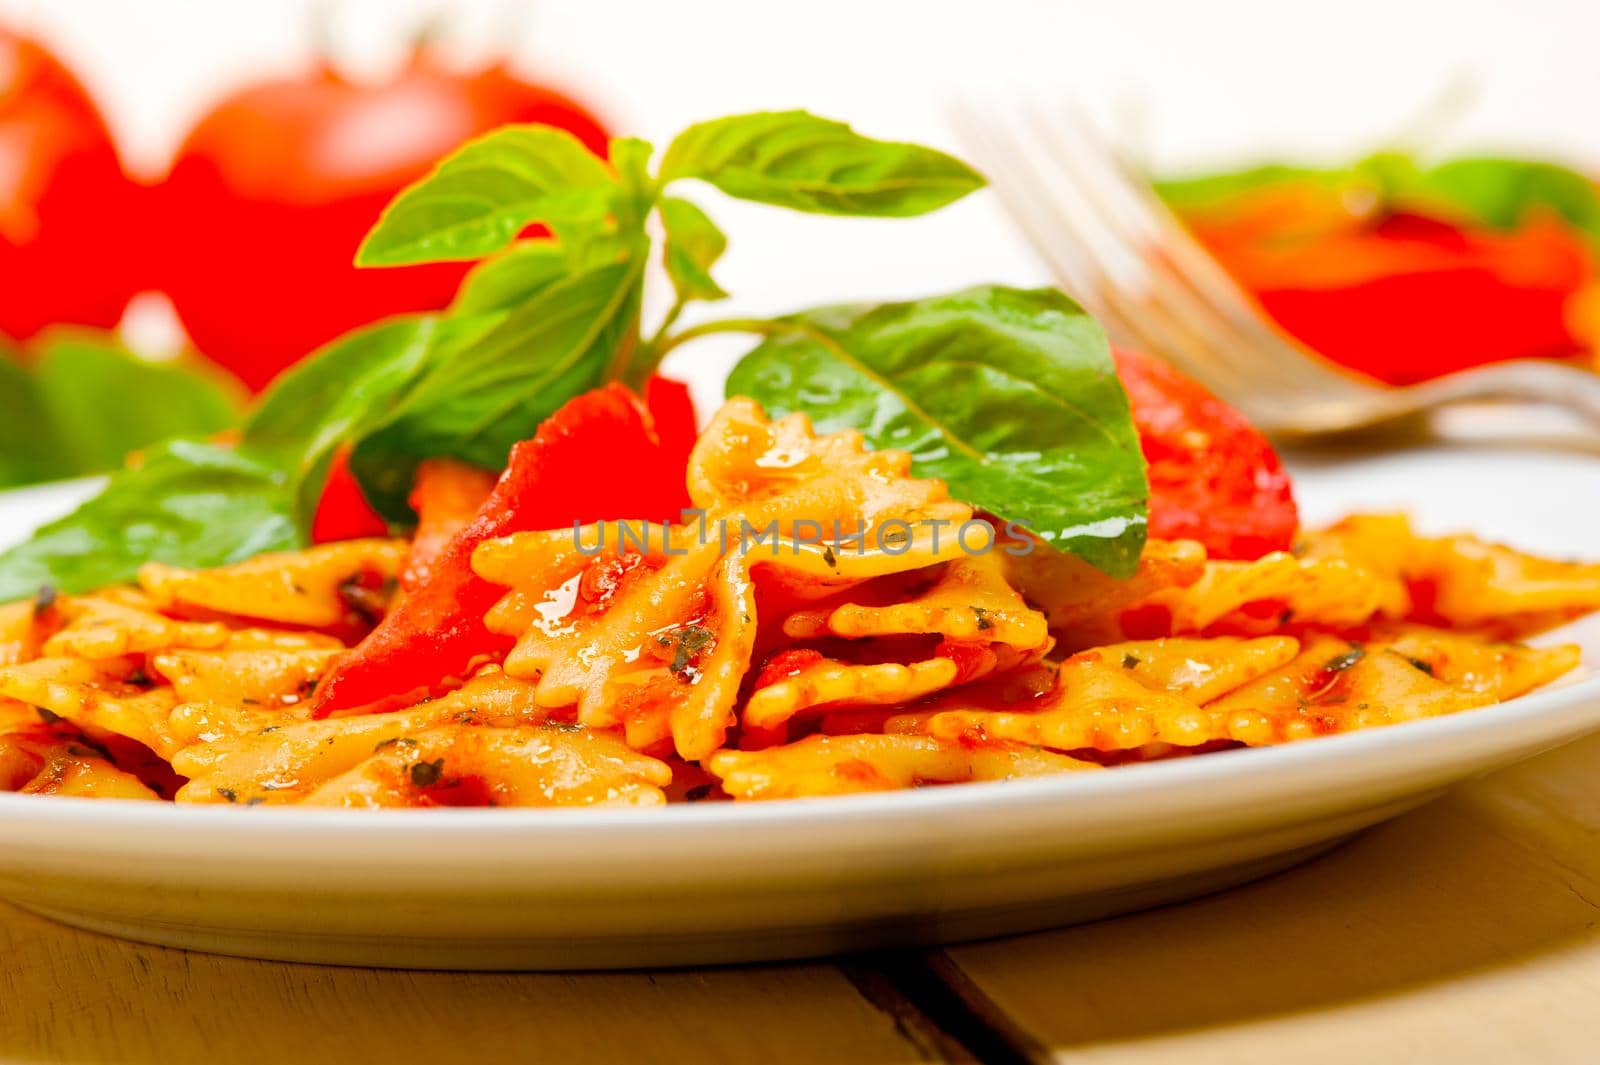 Italian pasta farfalle butterfly bow-tie and tomato sauce by keko64